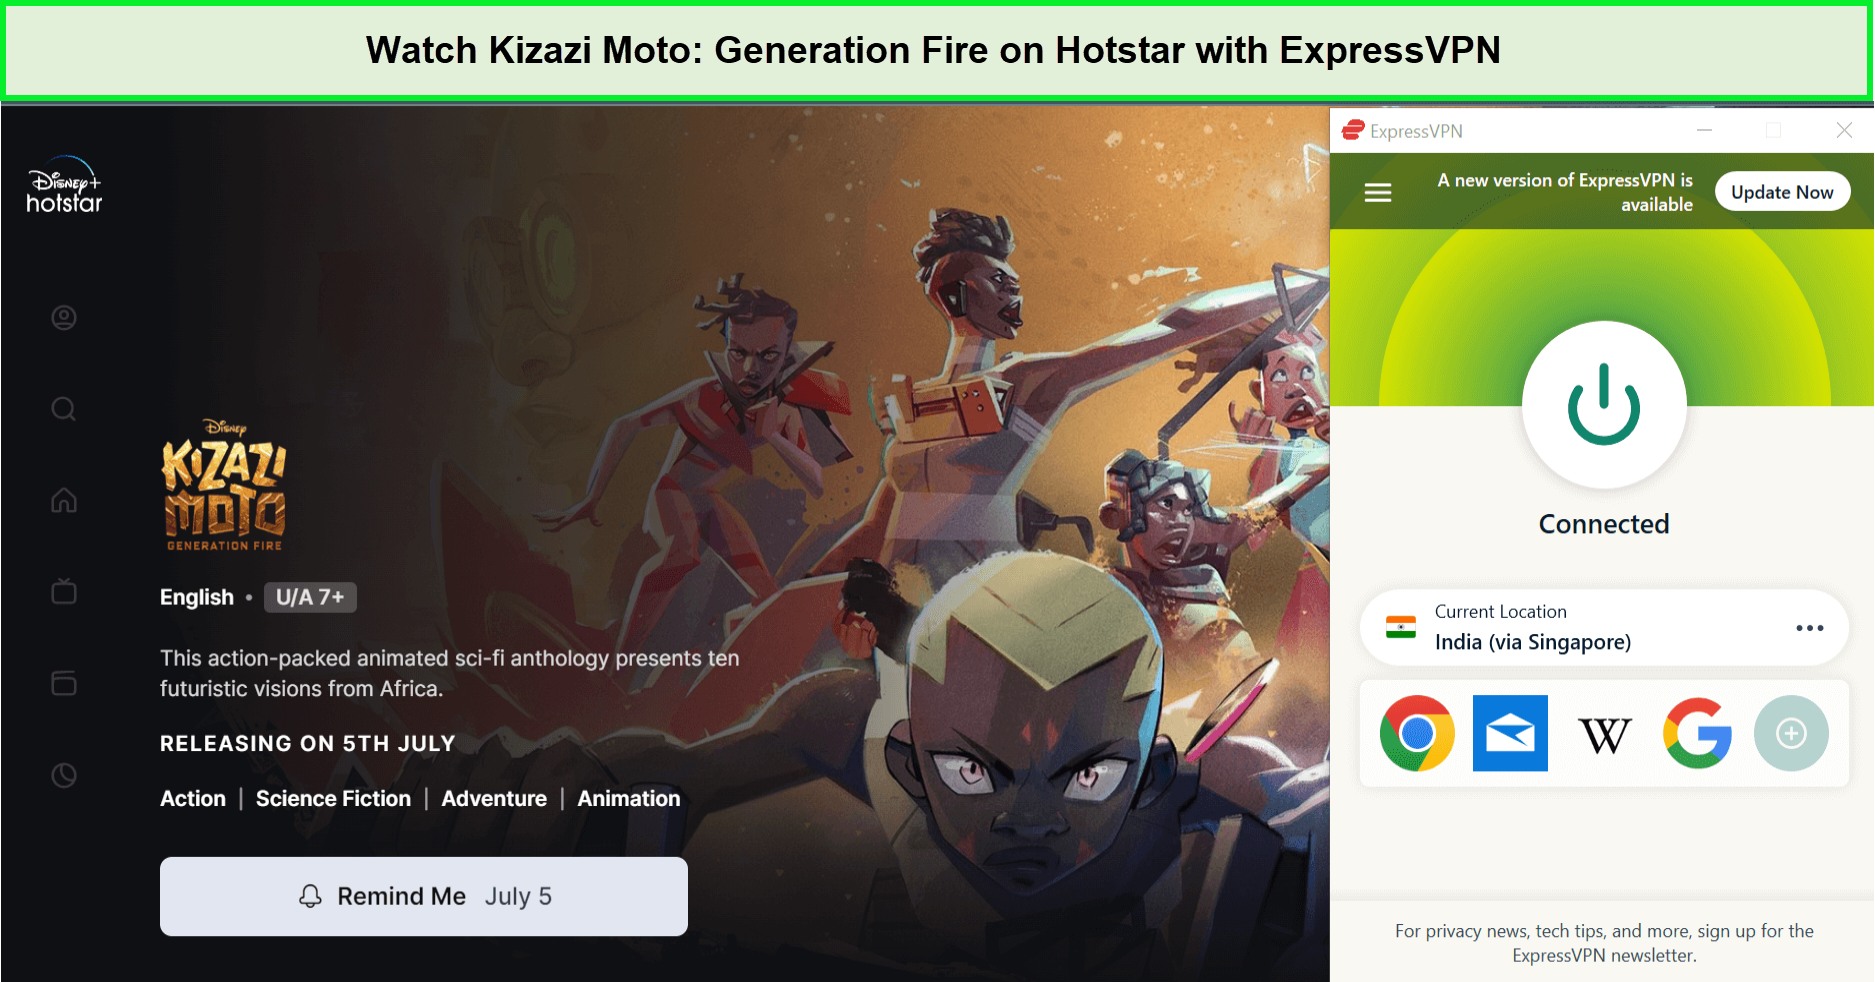 Watch-Kizazi-Moto-Generation-Fire-in-Italy-on-Hotstar-with-ExpressVPN